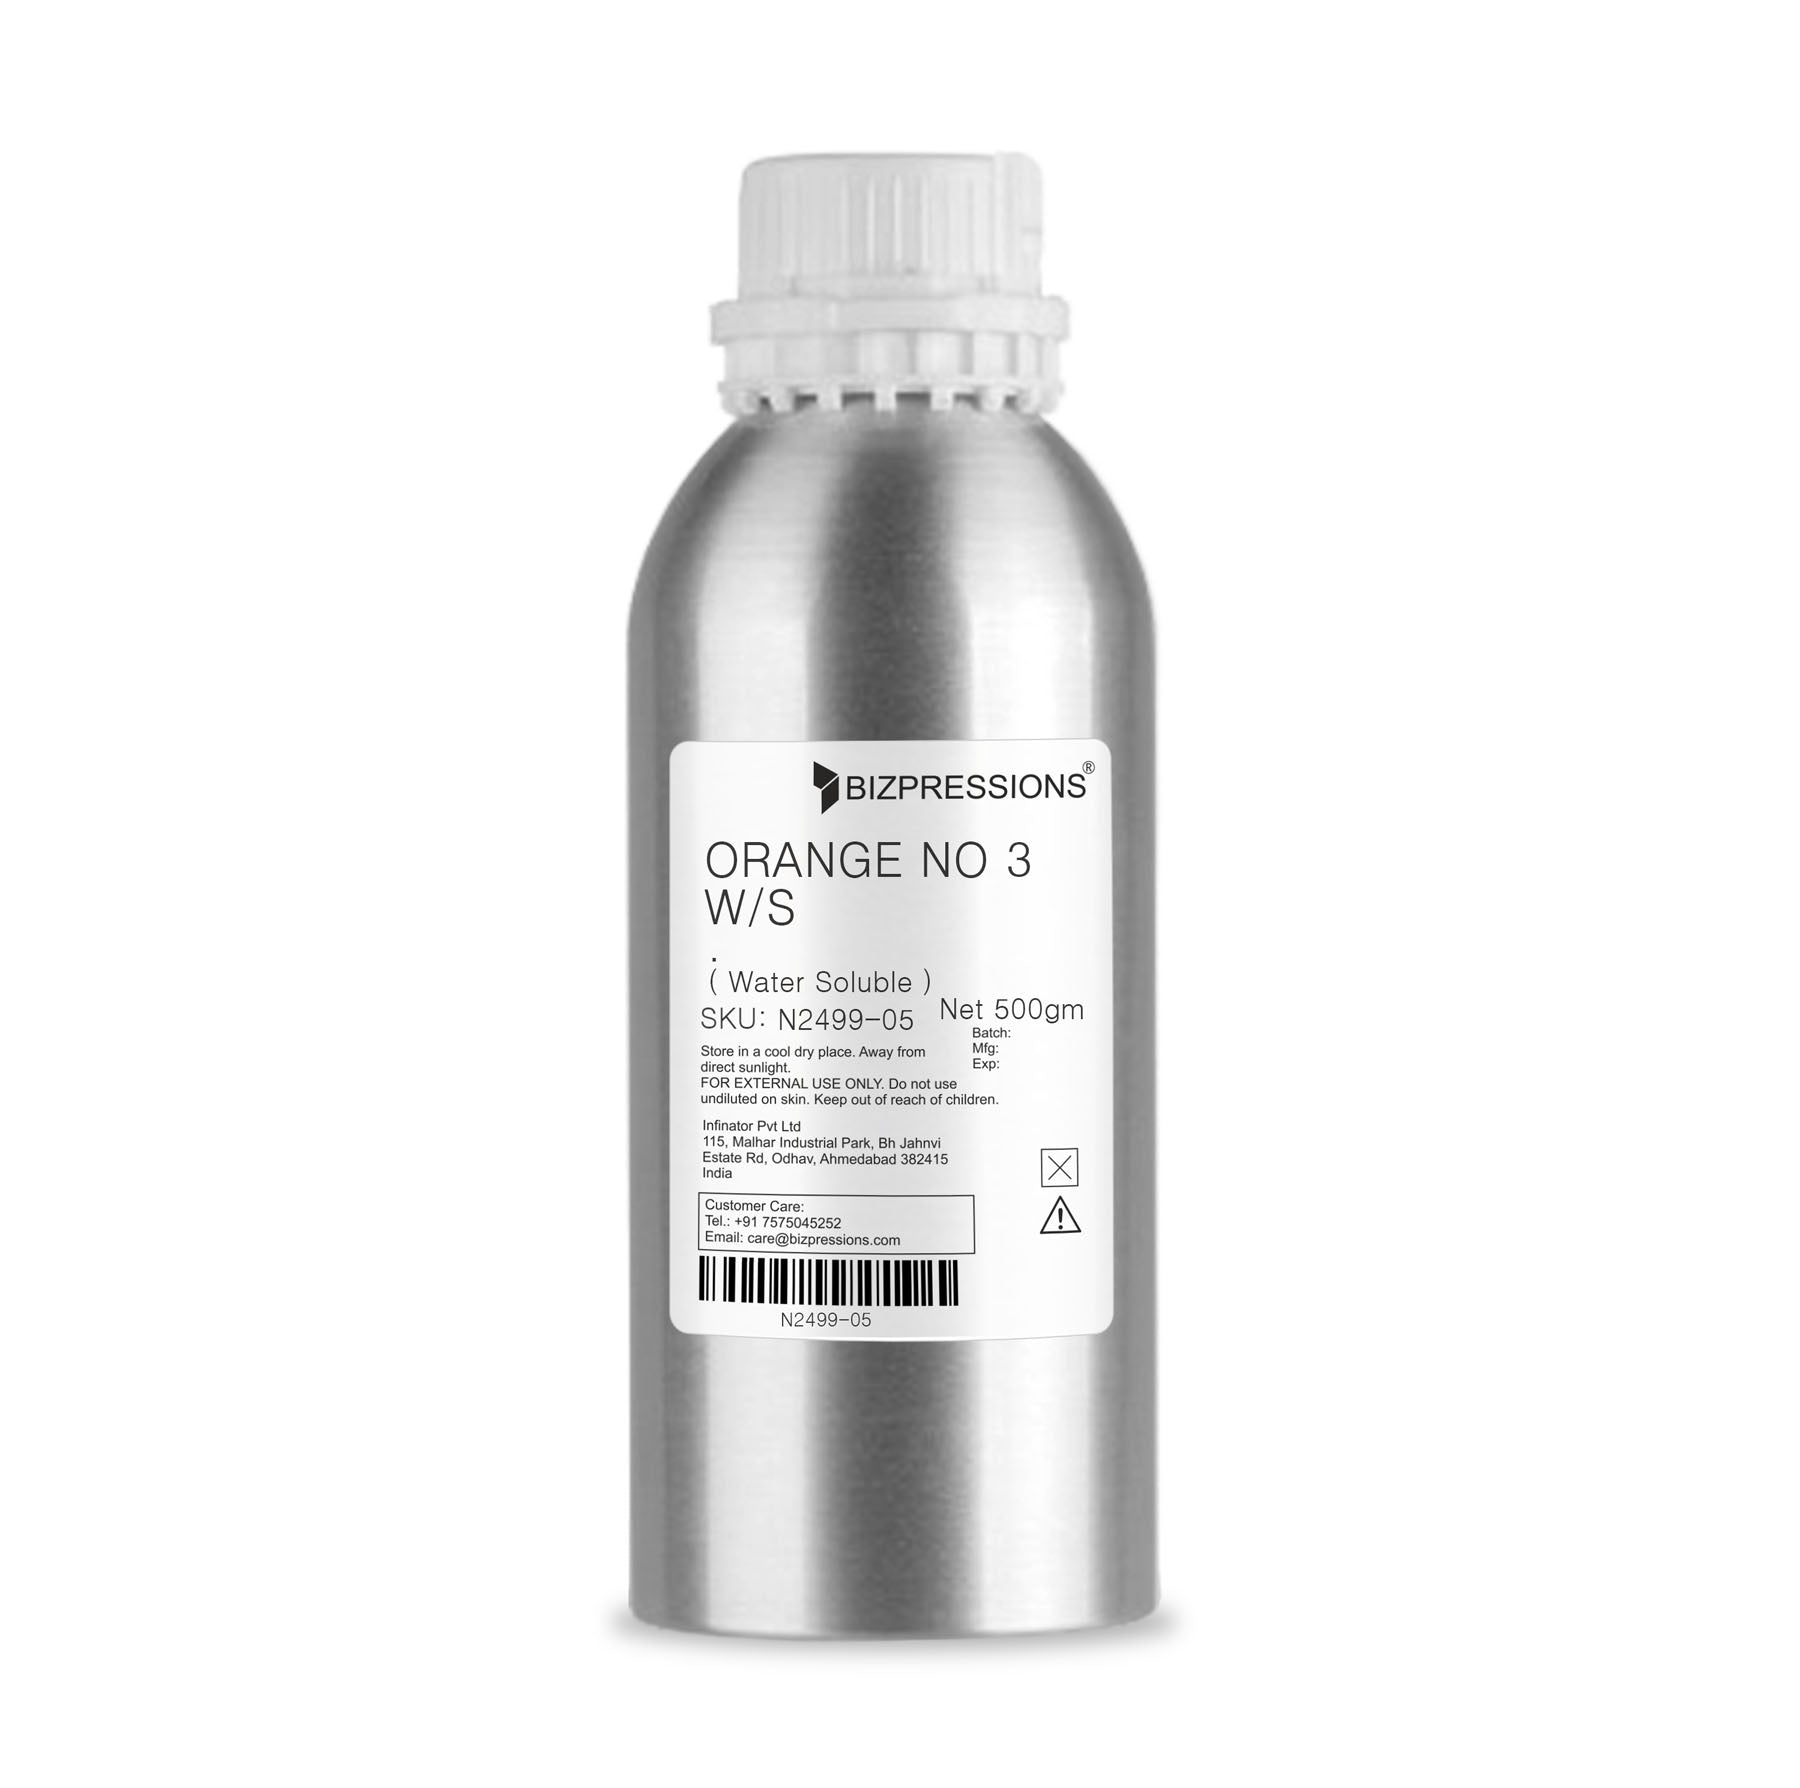 ORANGE NO 3 W/S - Fragrance ( Water Soluble ) - 500 gm